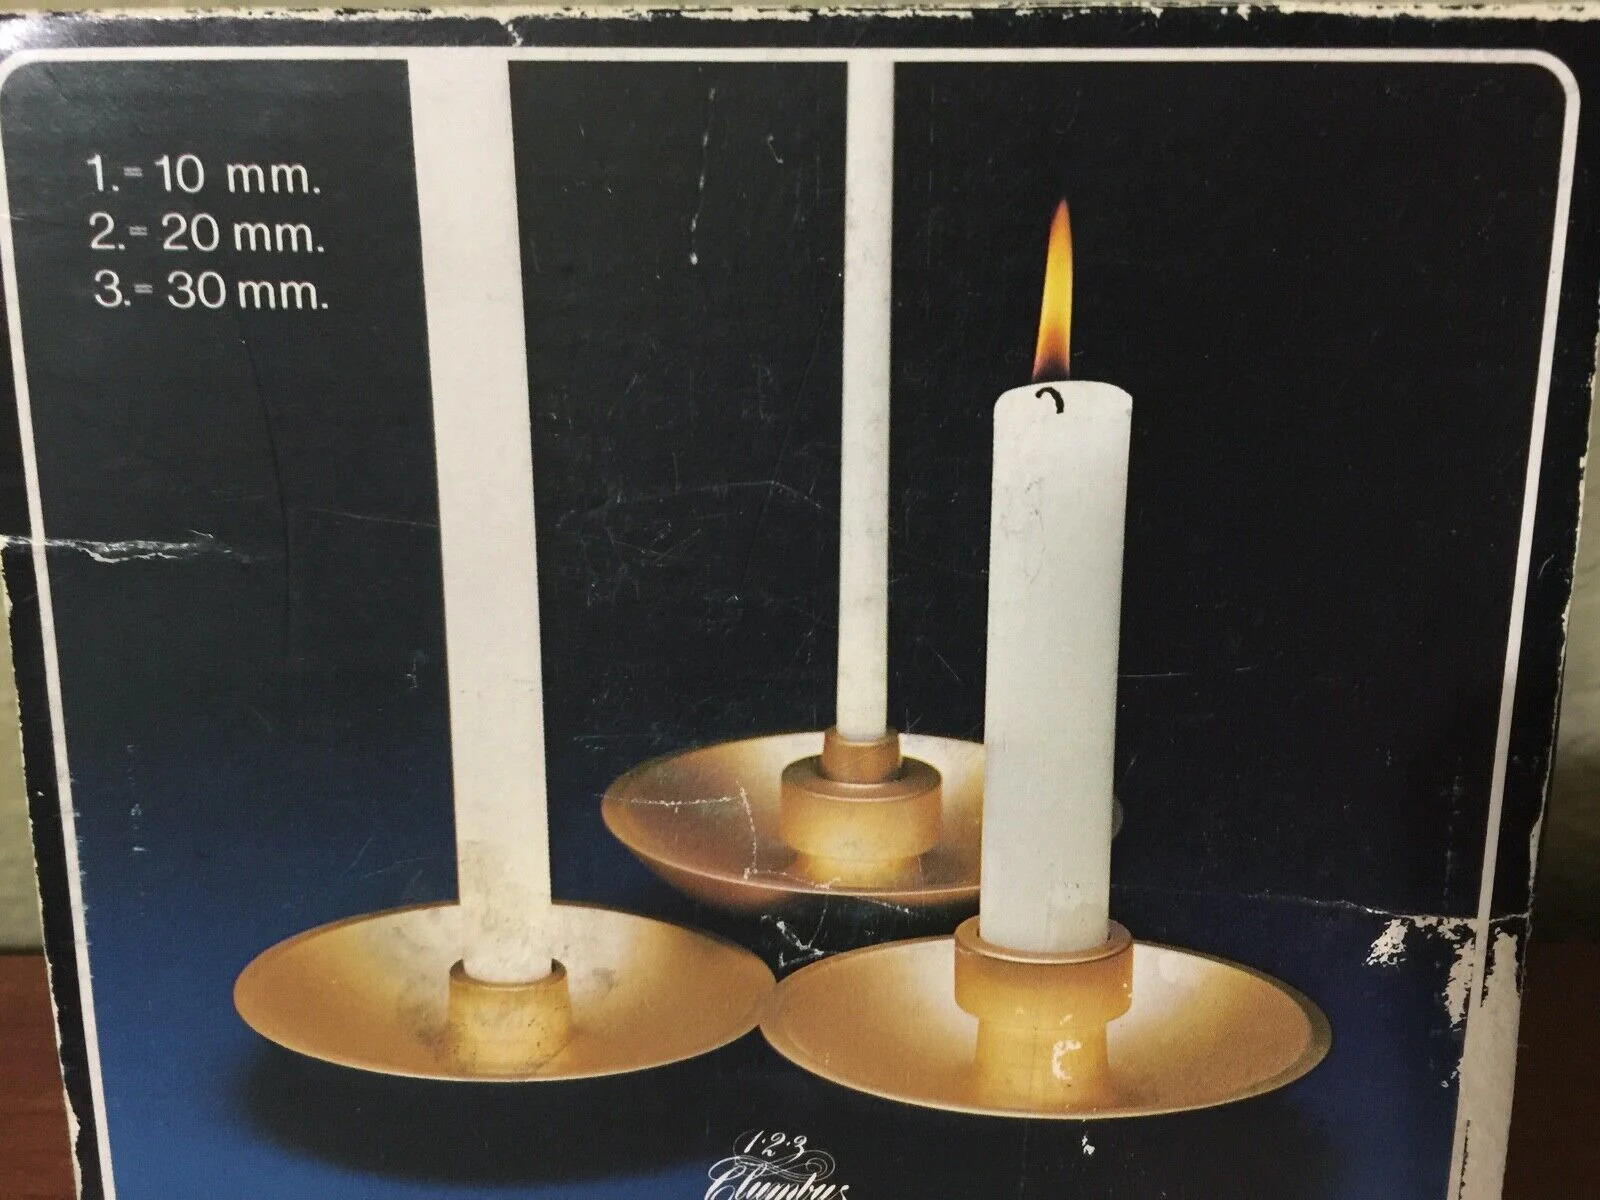 Set of 2 vintage Denmark candleholders multi sizes gold heavy metal Easter table